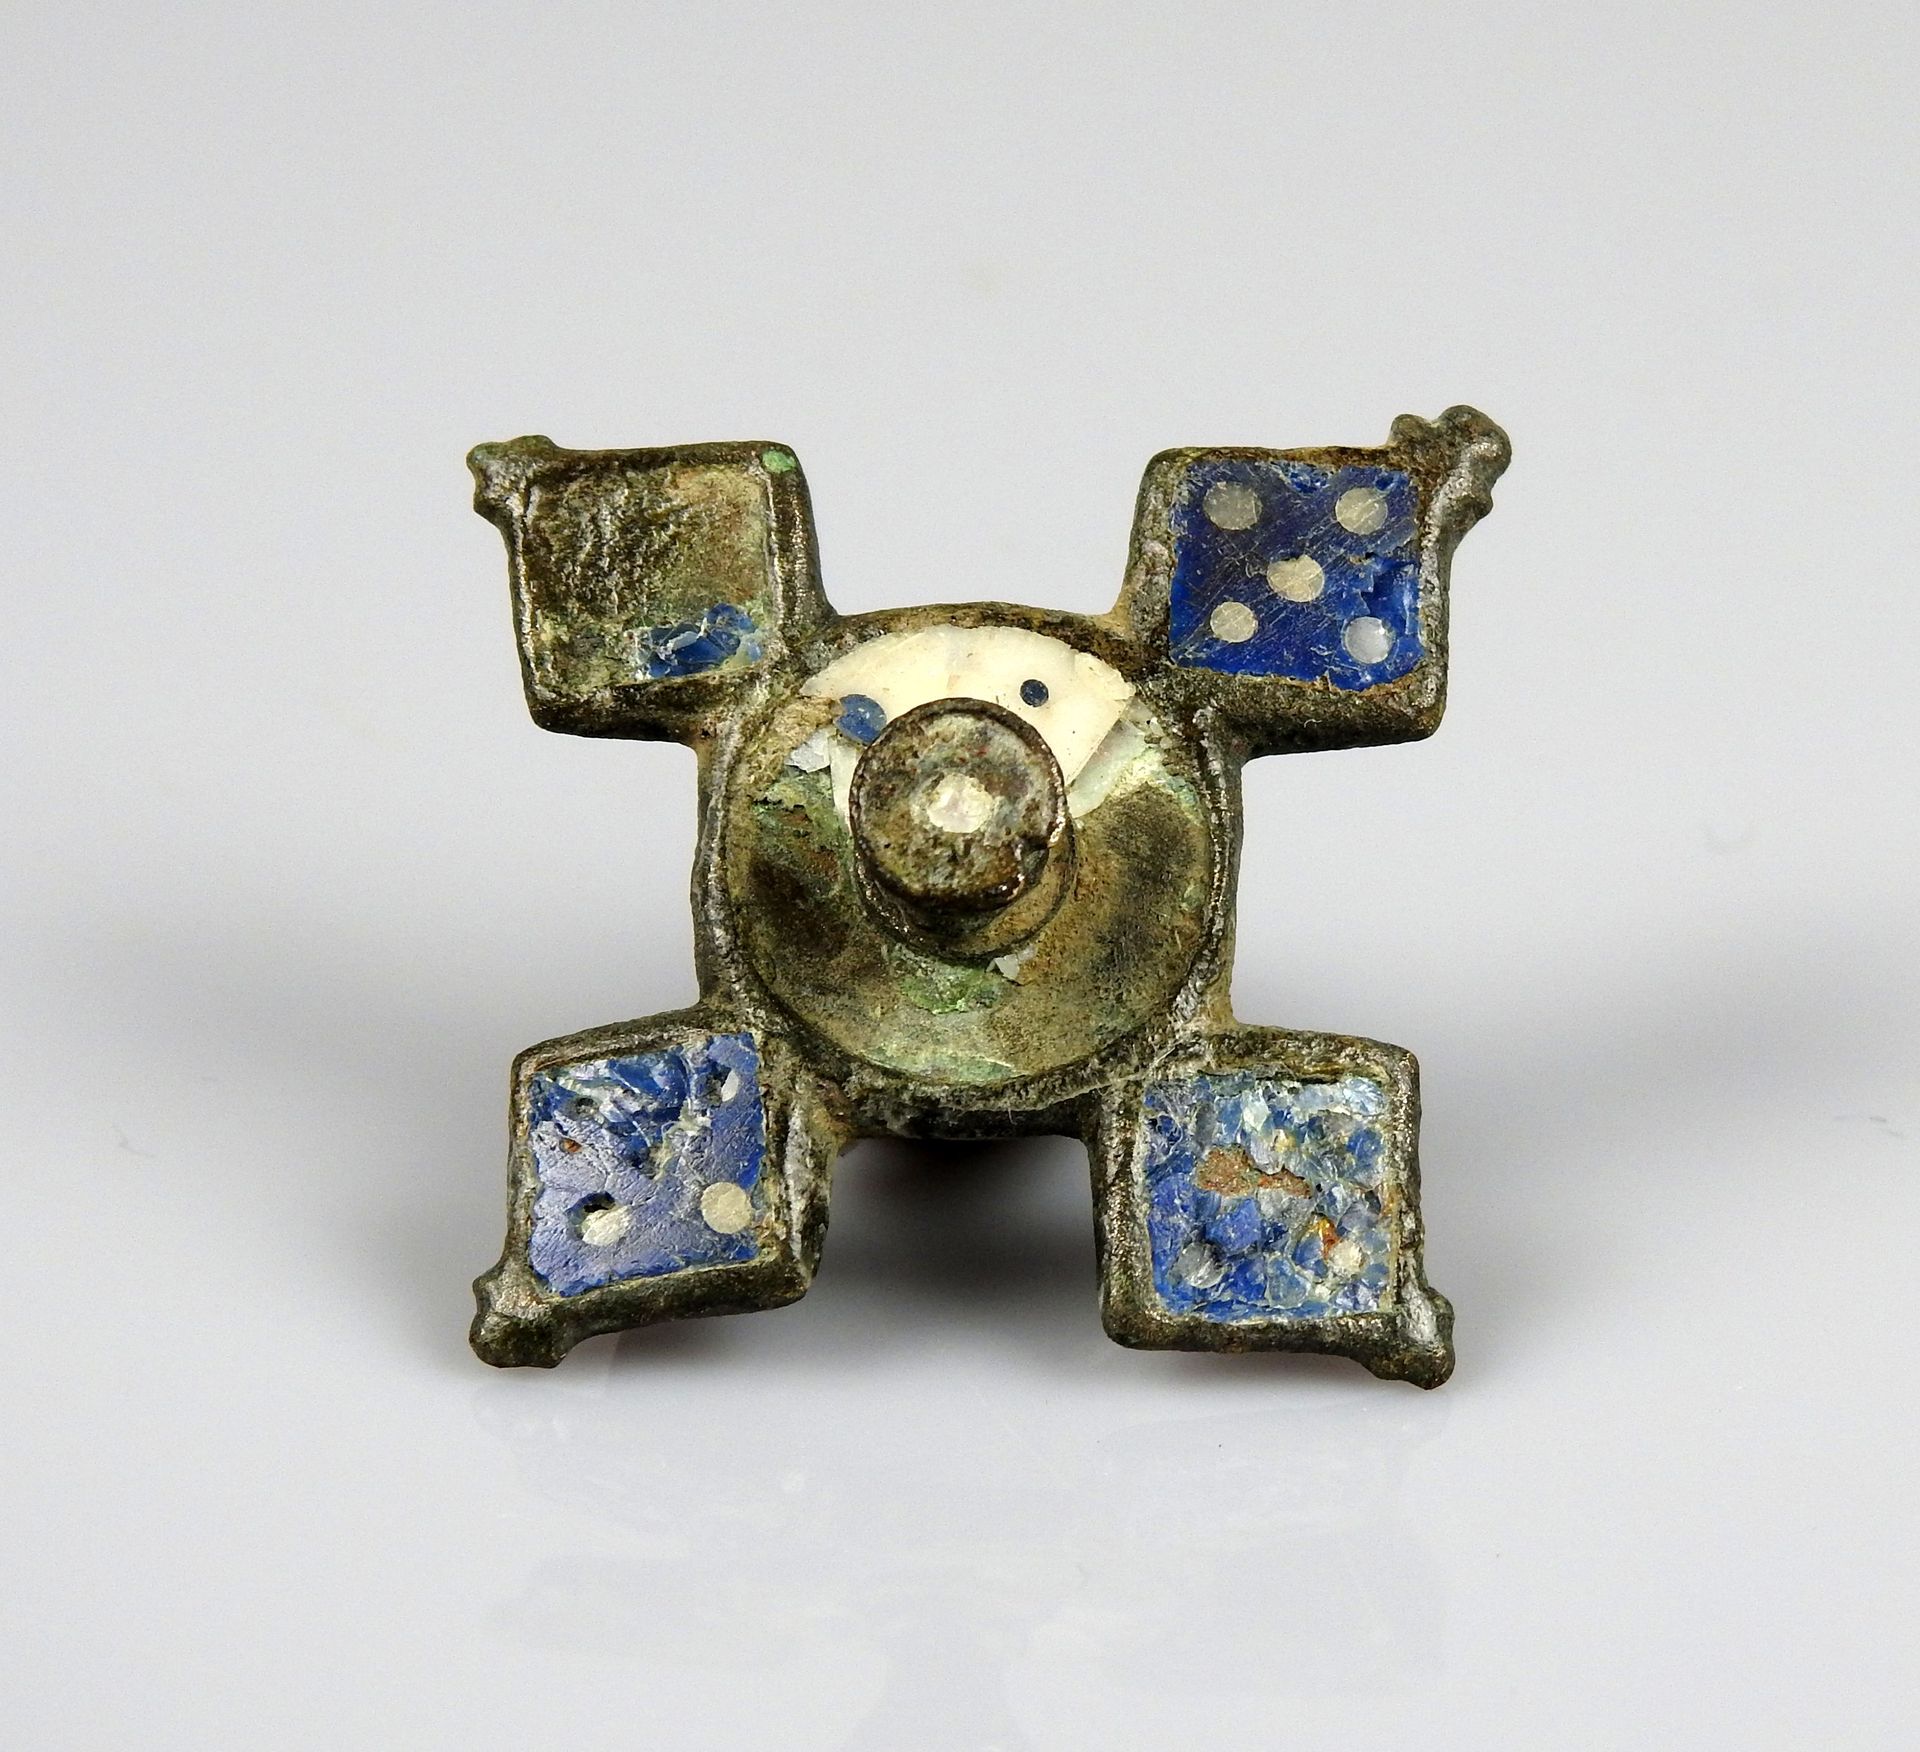 Null 十字形的腓骨，在中央枢纽周围的菱形盒子里有蓝色的珐琅彩

青铜4.3厘米

罗马时期 2-3世纪